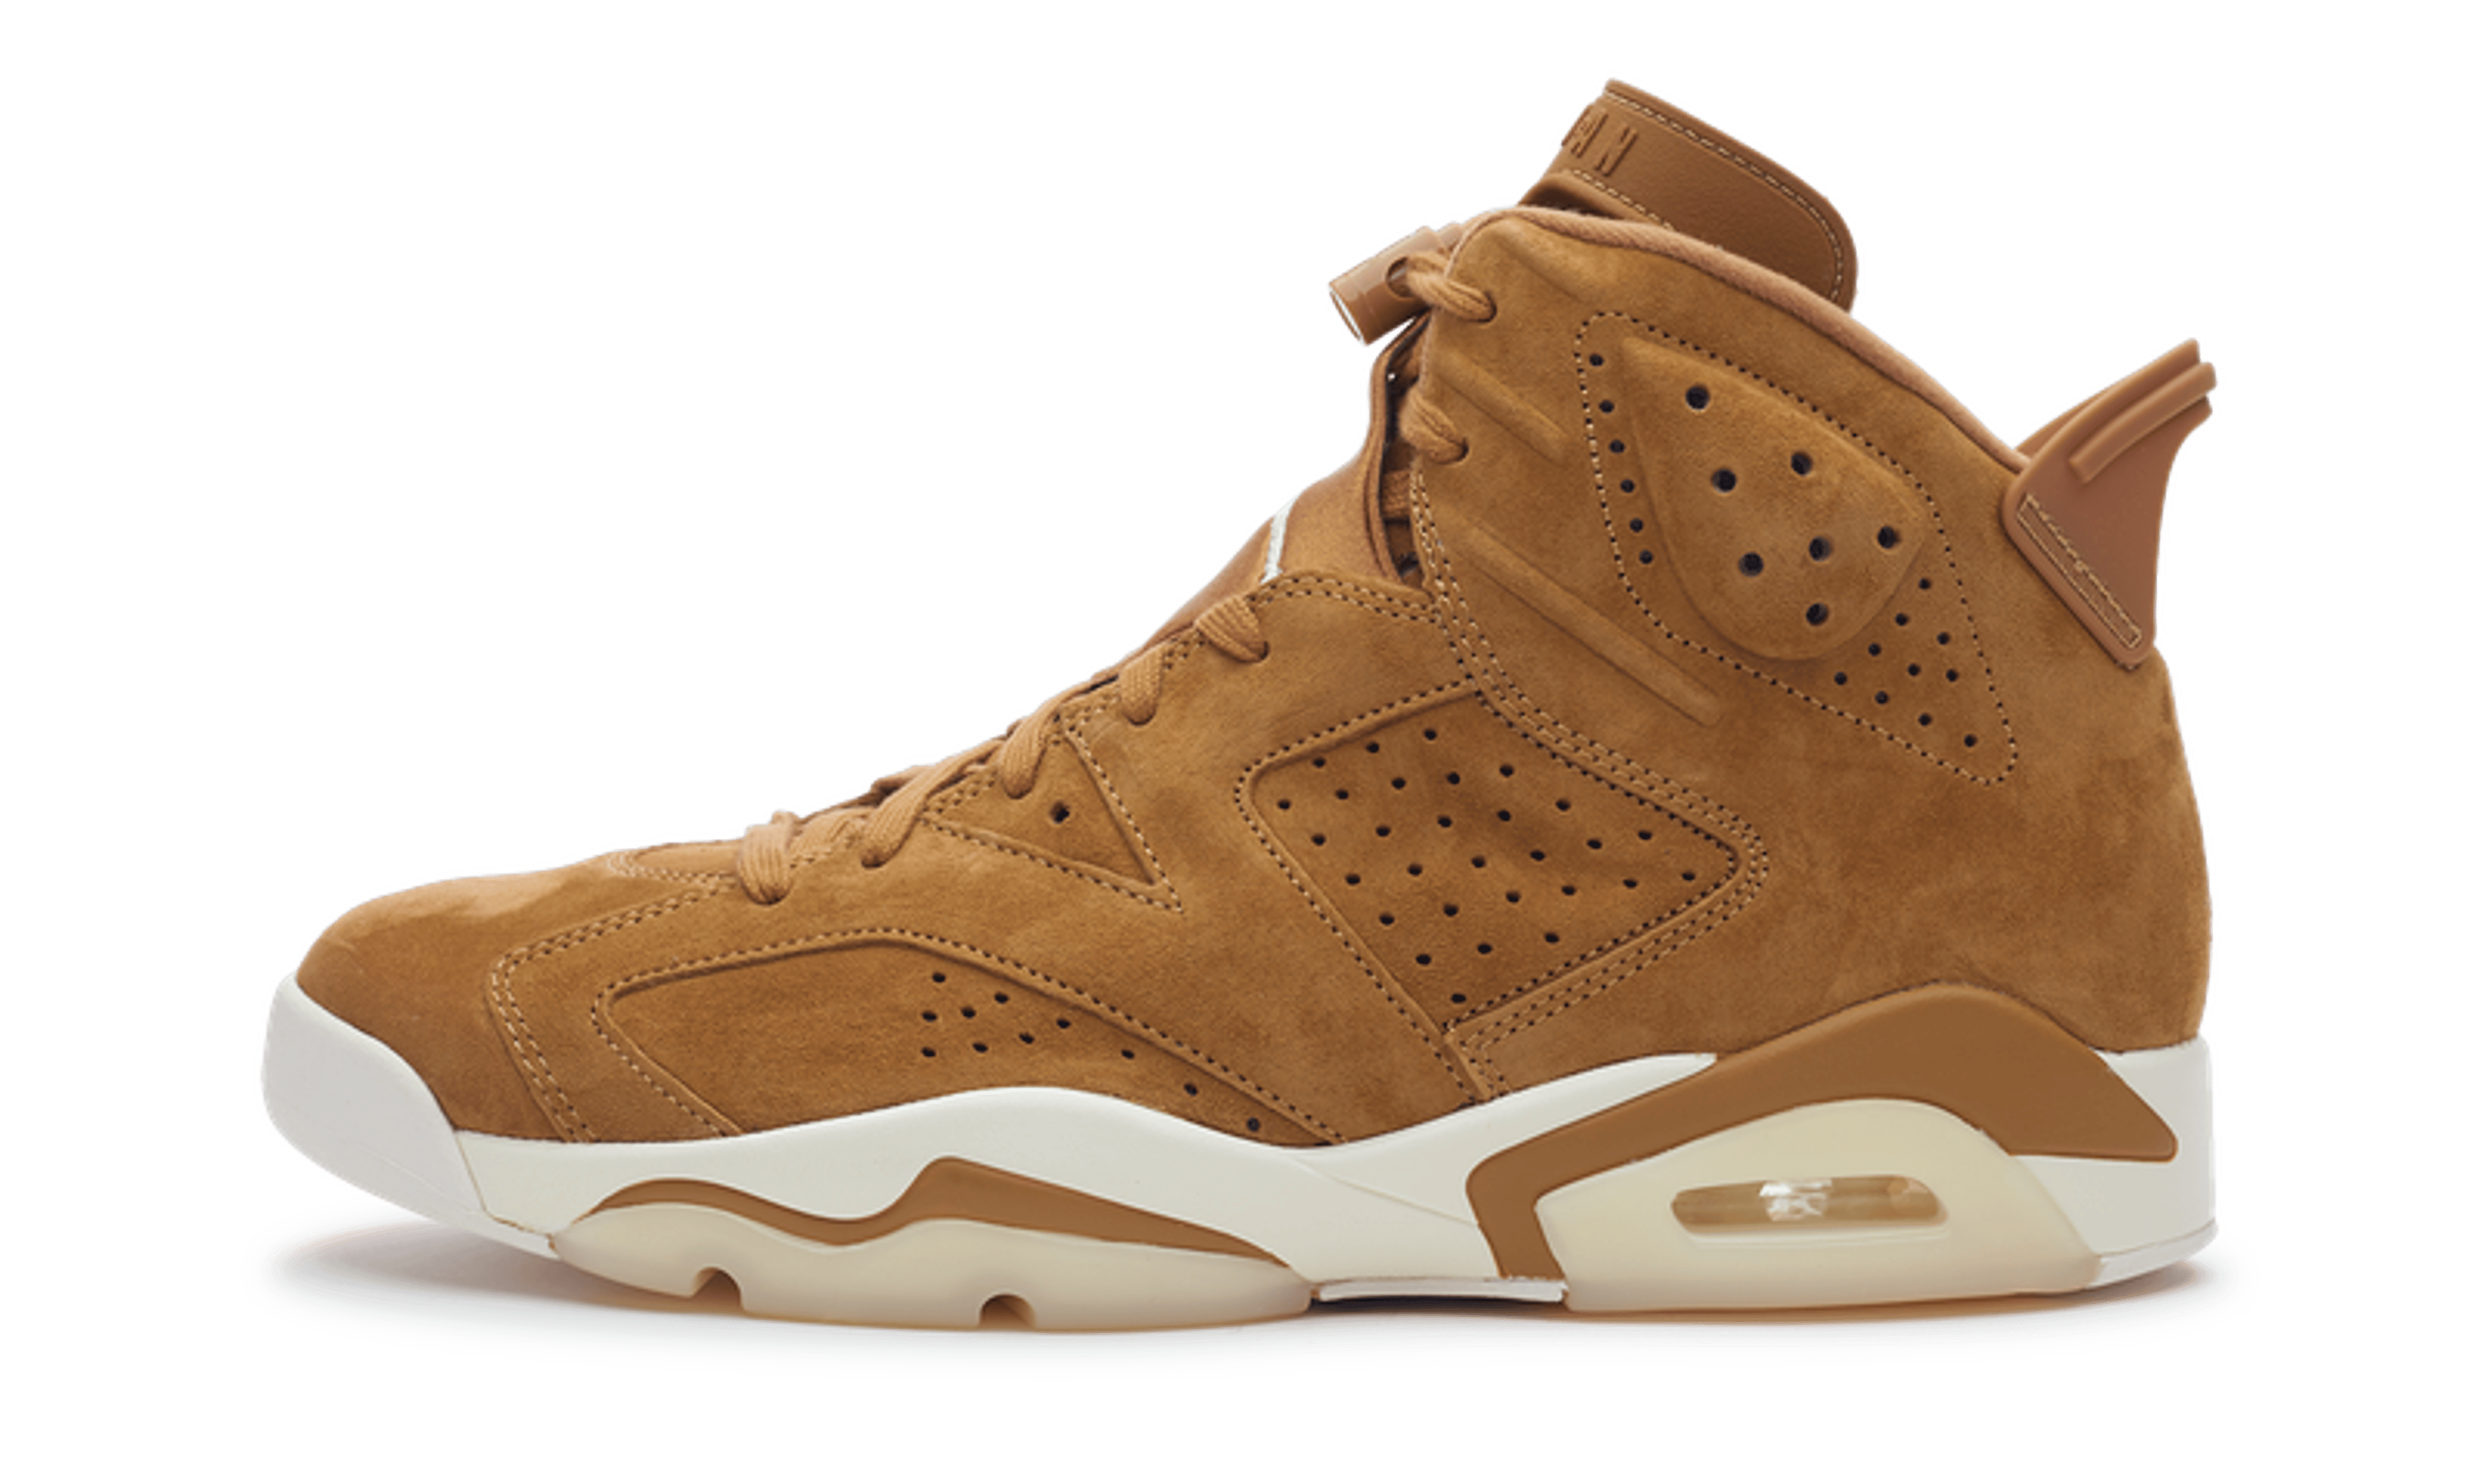 Nike Jordan 6 Retro Wheat 2017 (384664-705) Men's Size 9-11